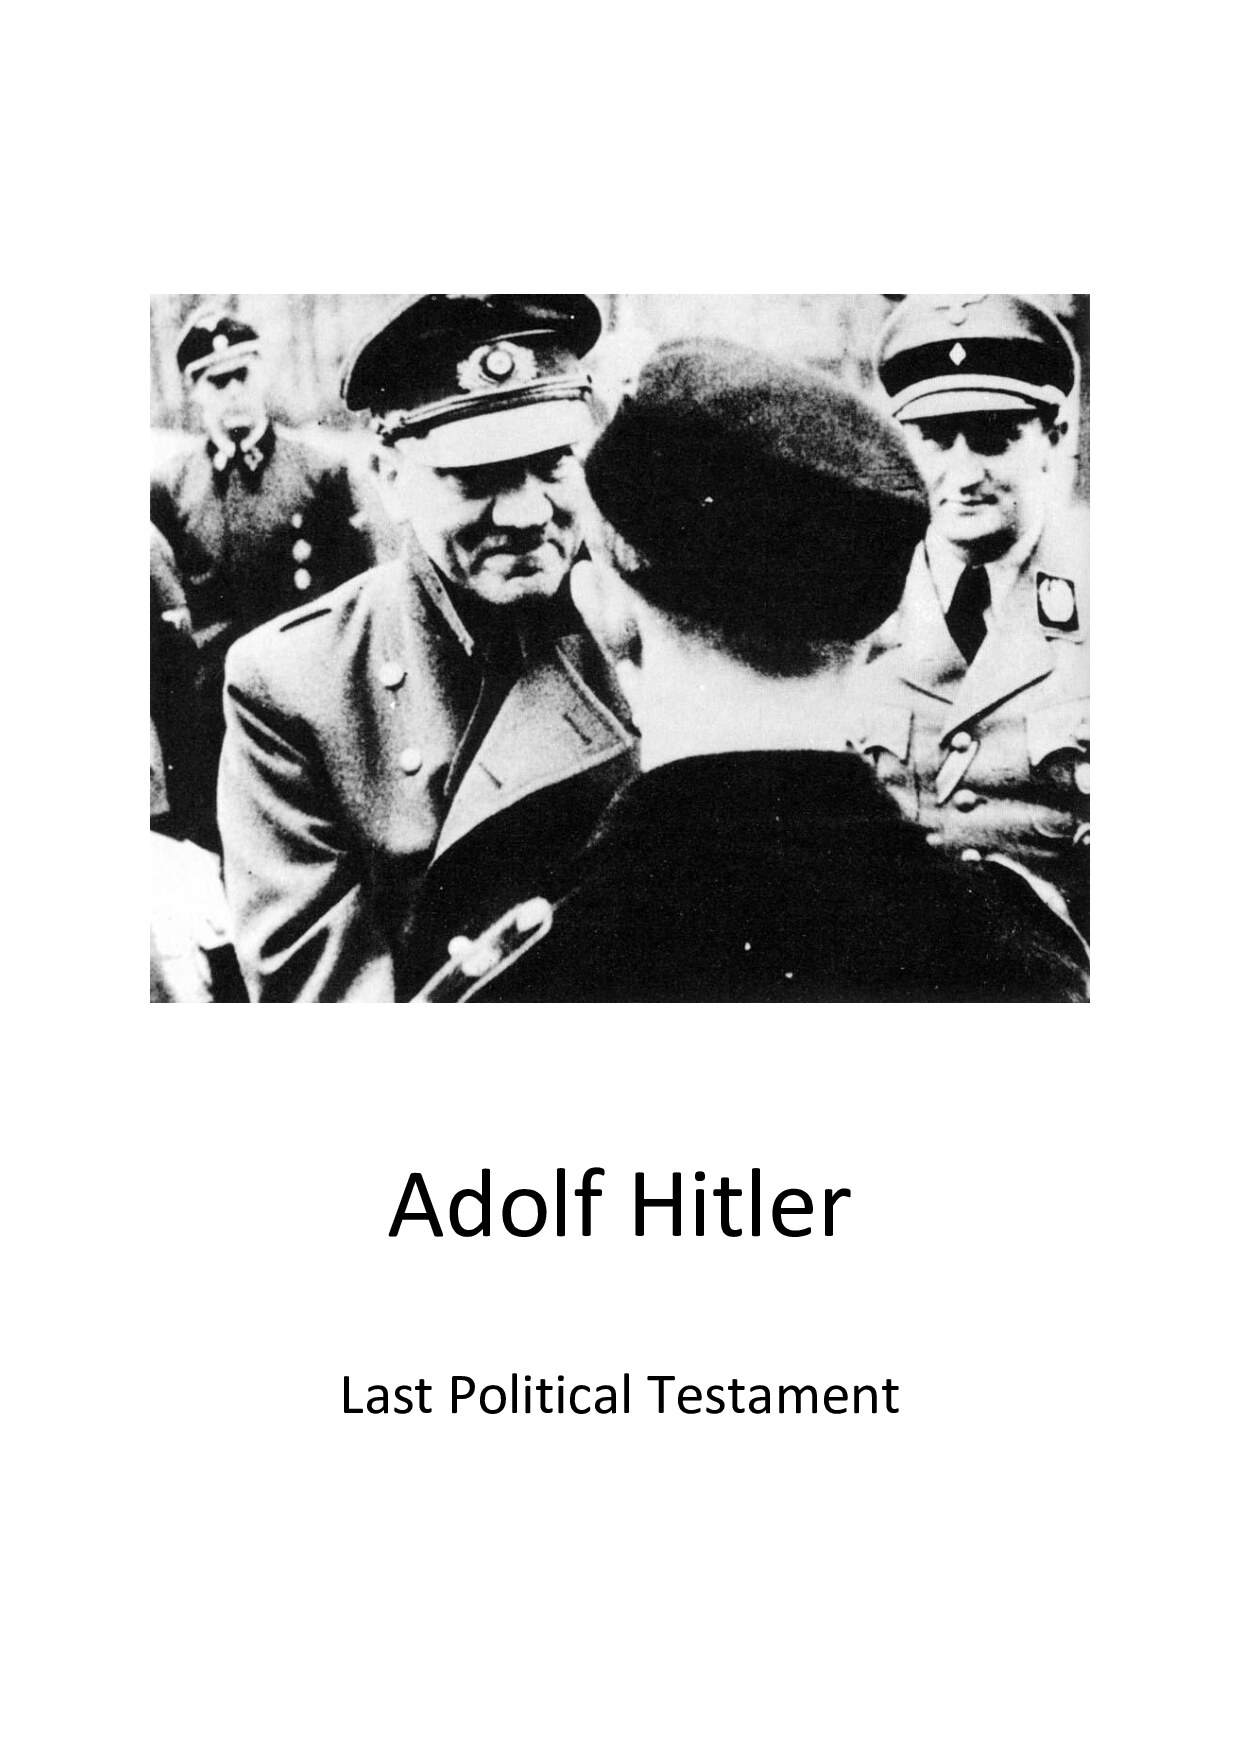 Adolf Hitler's Last Political Testament